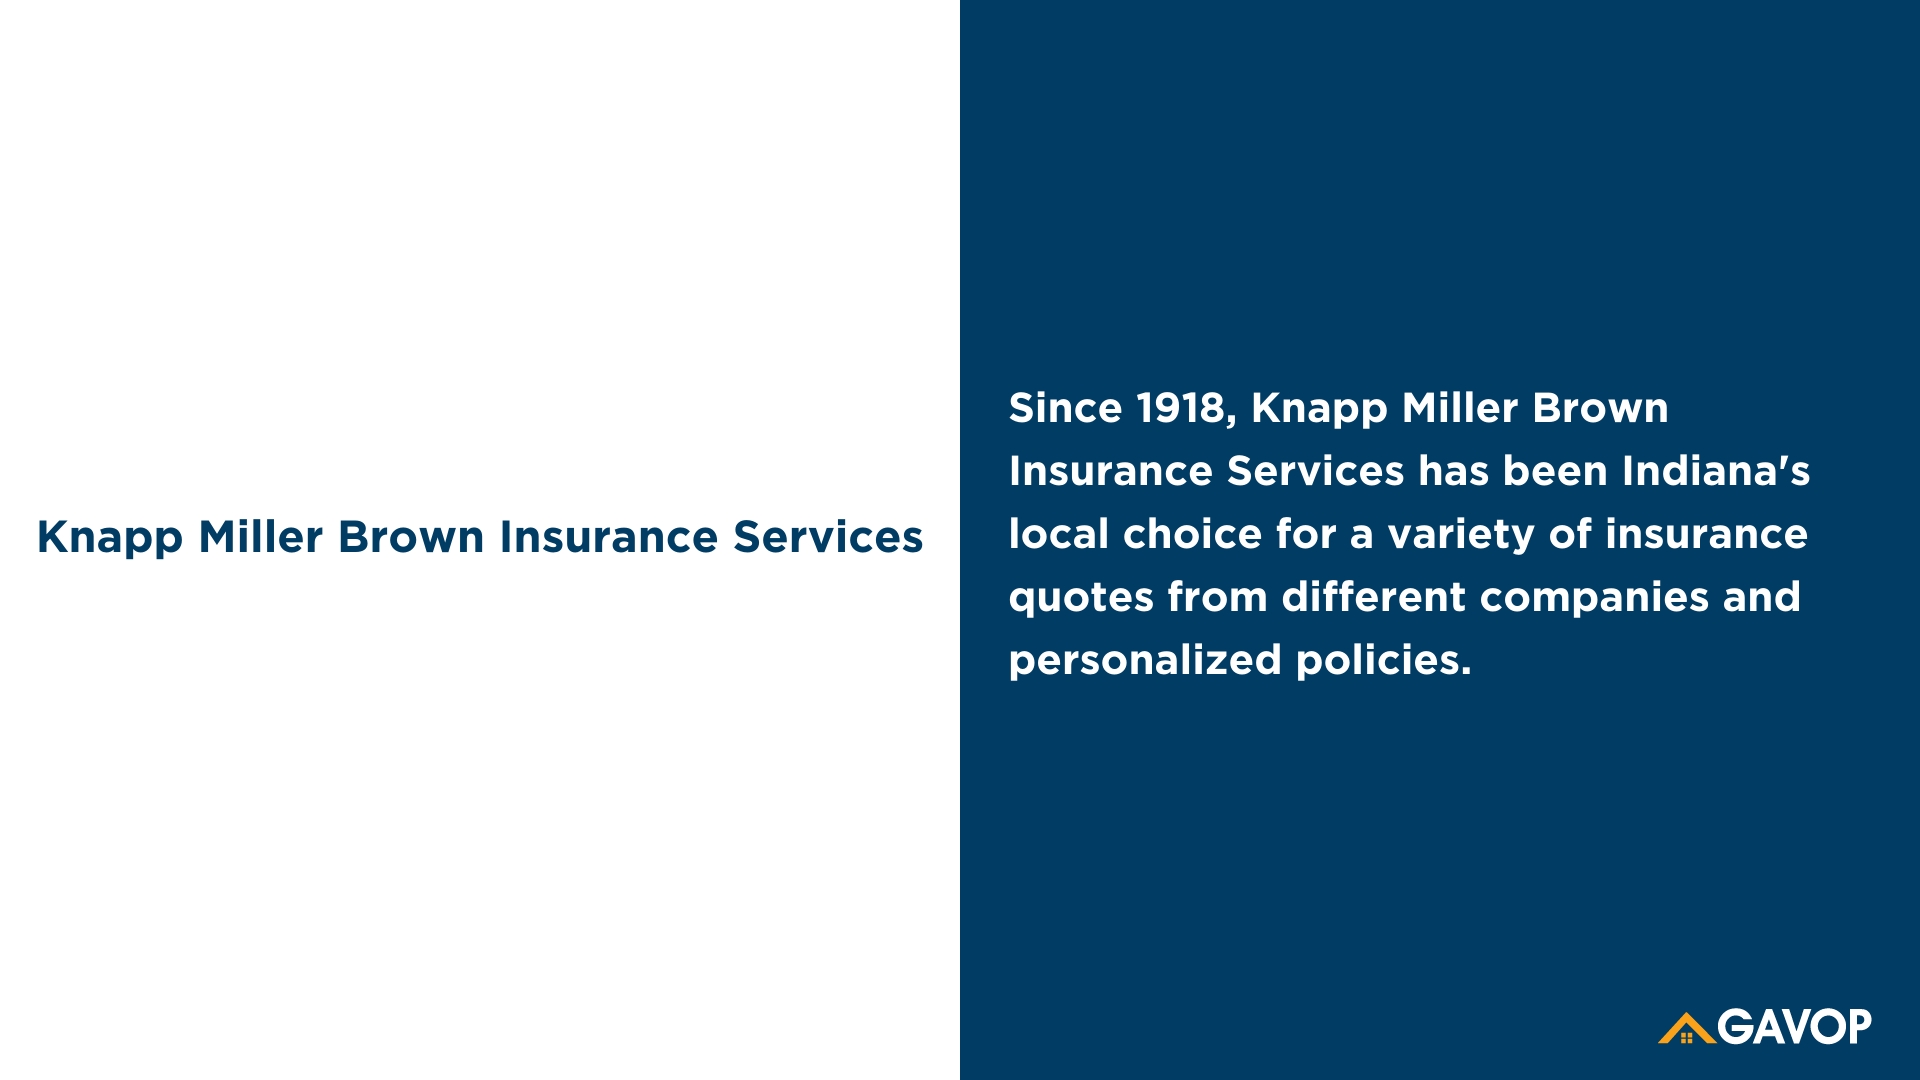 Knapp Miller Brown Insurance Services, Inc.